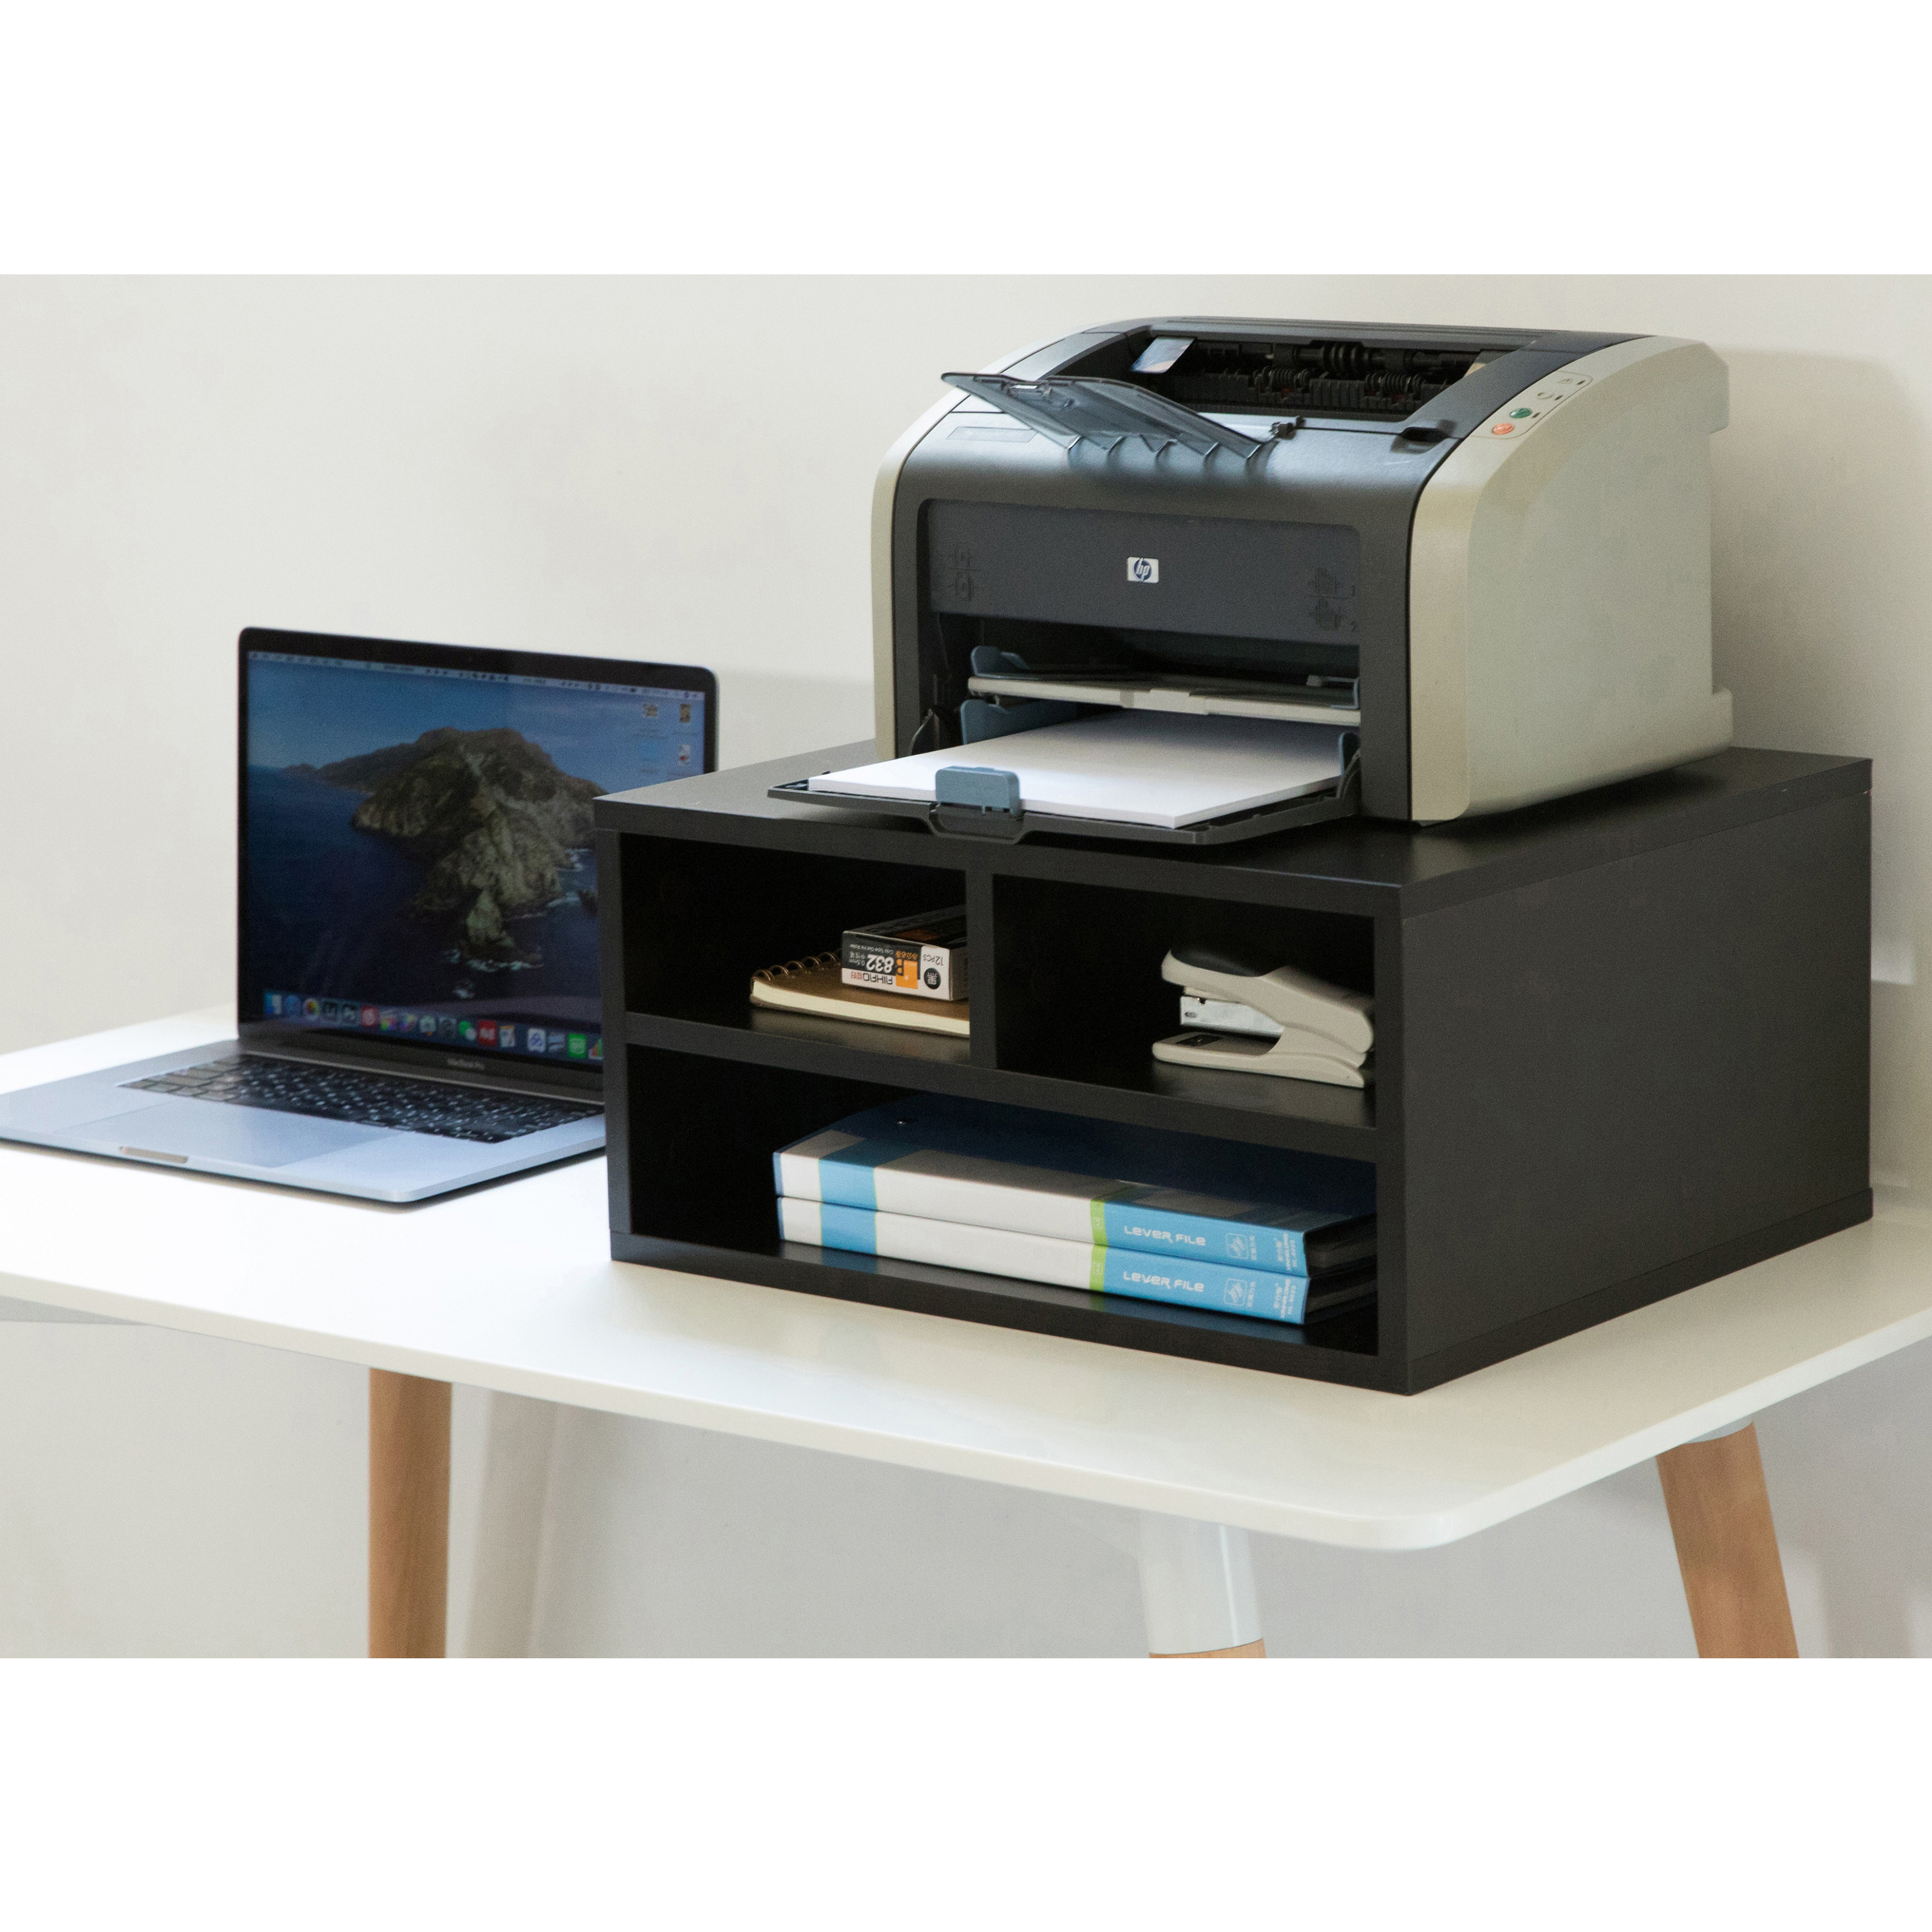 Printer Stand Shelf Wood Office Desktop Compartment Organizer - White